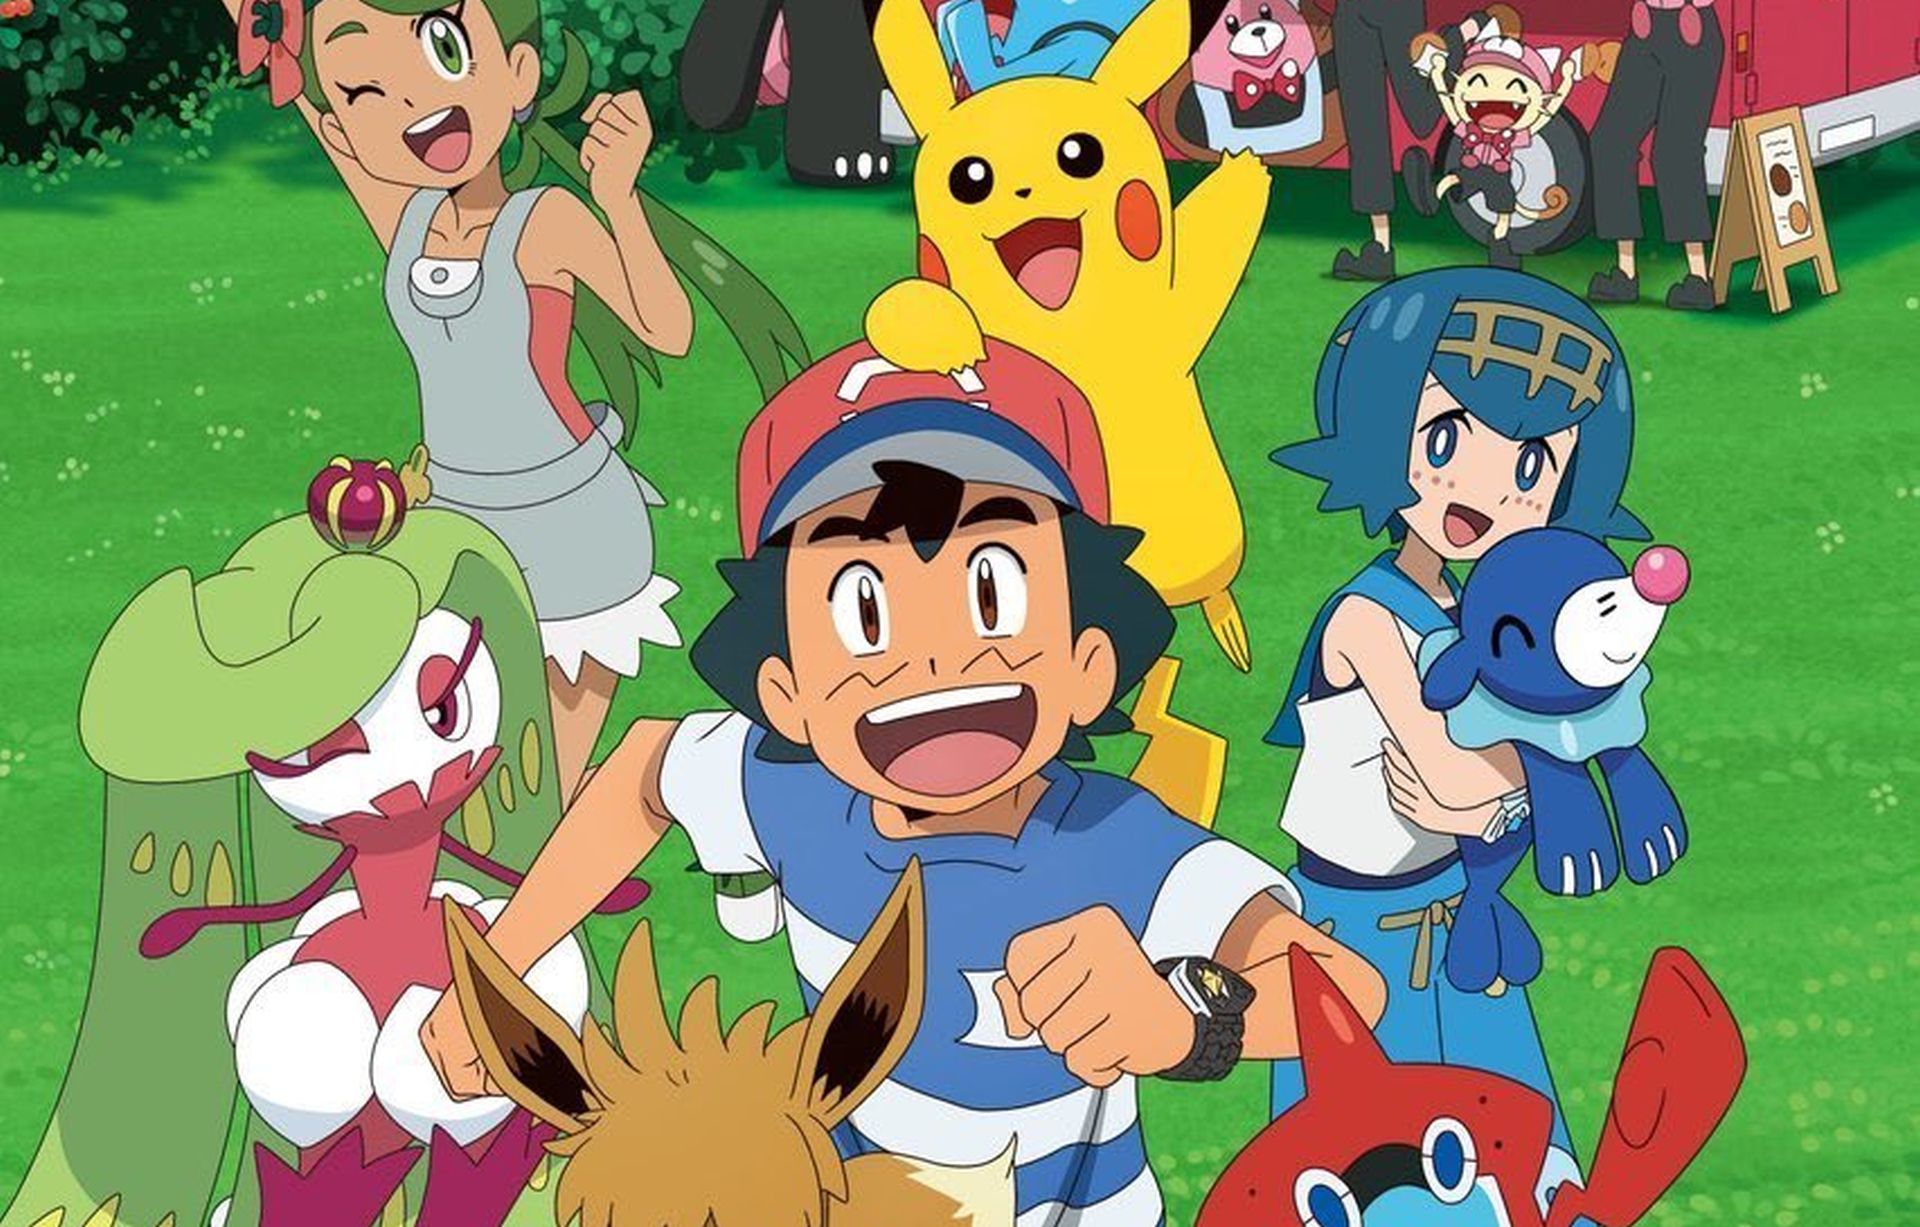 The Power of Alola  Pokémon the Series: Sun & Moon—Ultra Legends